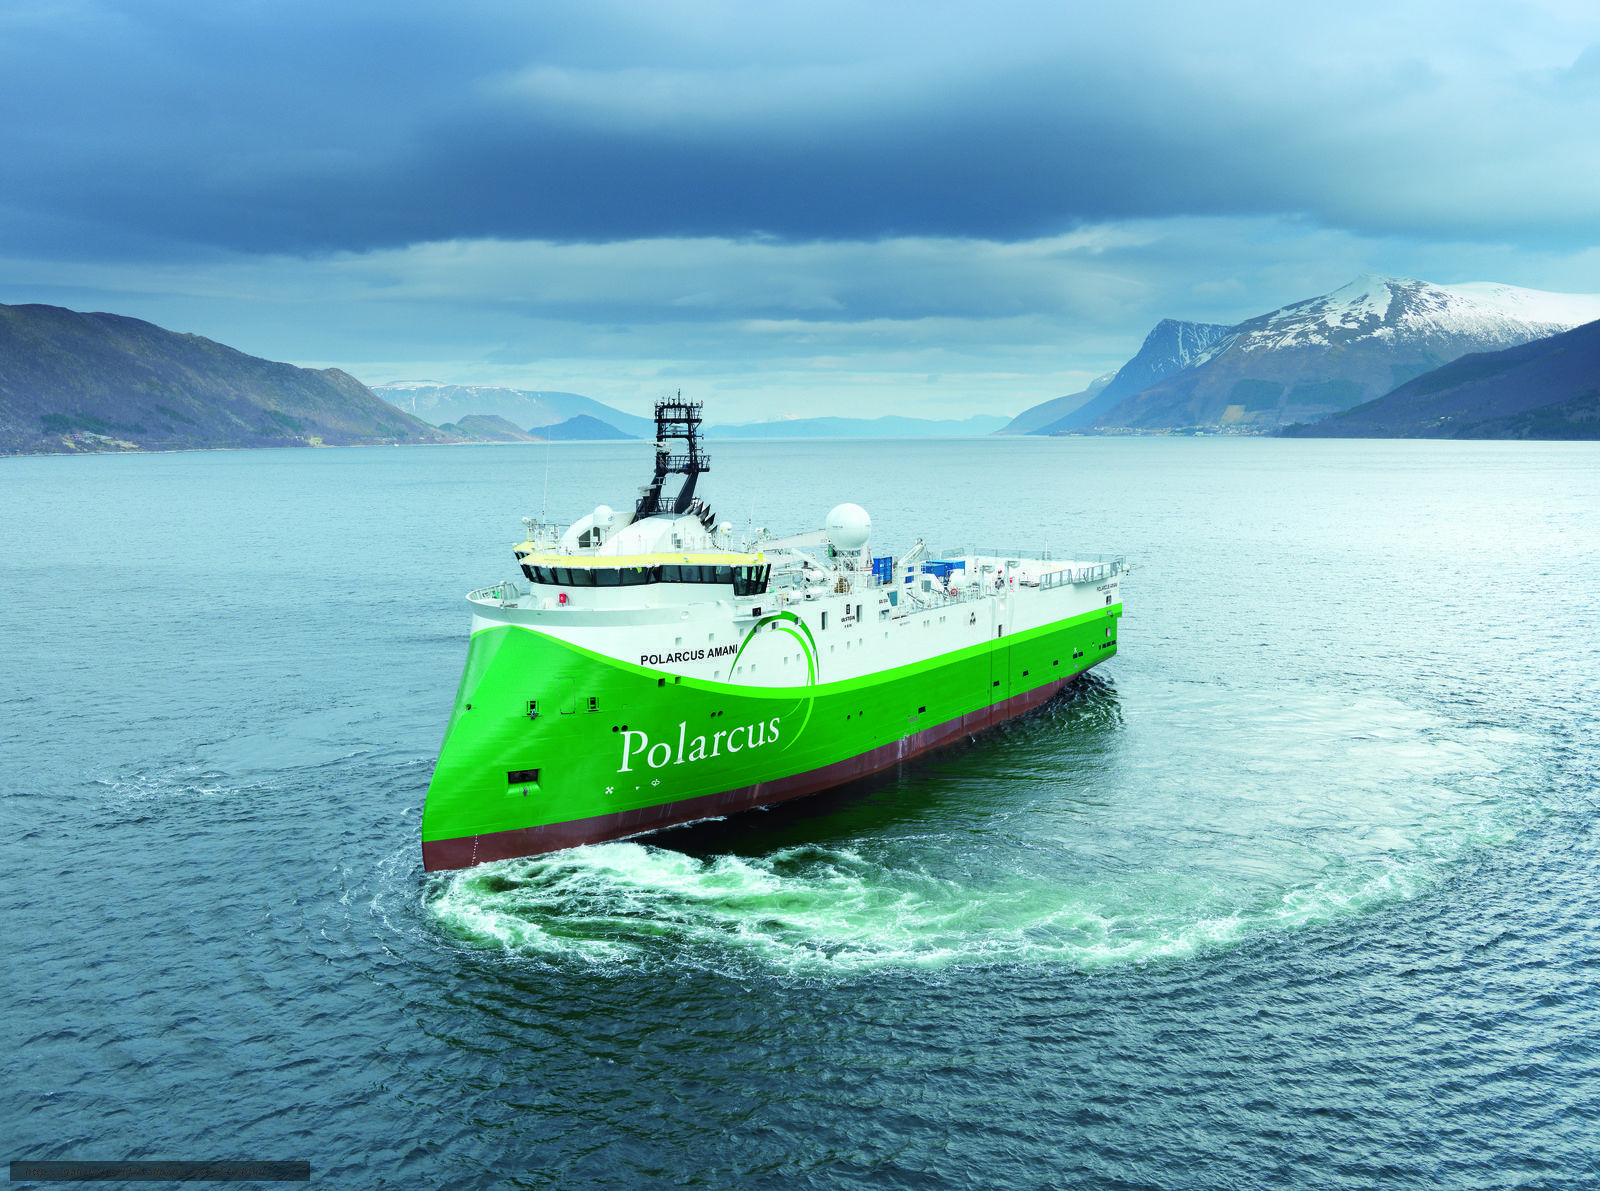 Download wallpaper Polarcus Amani, replenishment ship, offshore